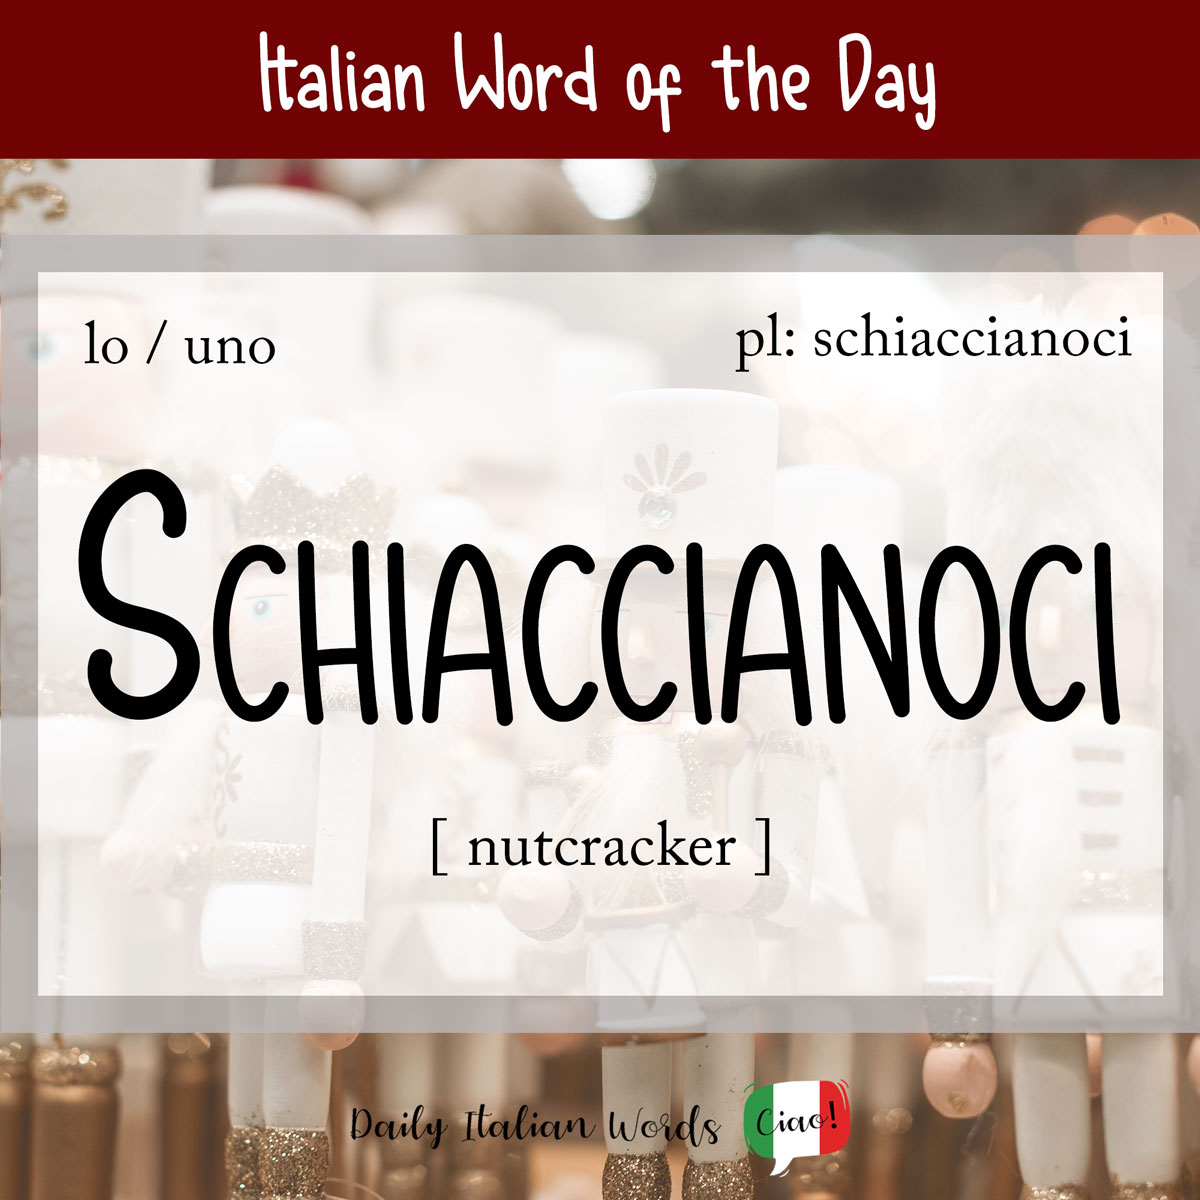 Italian word 'schiaccianoci"